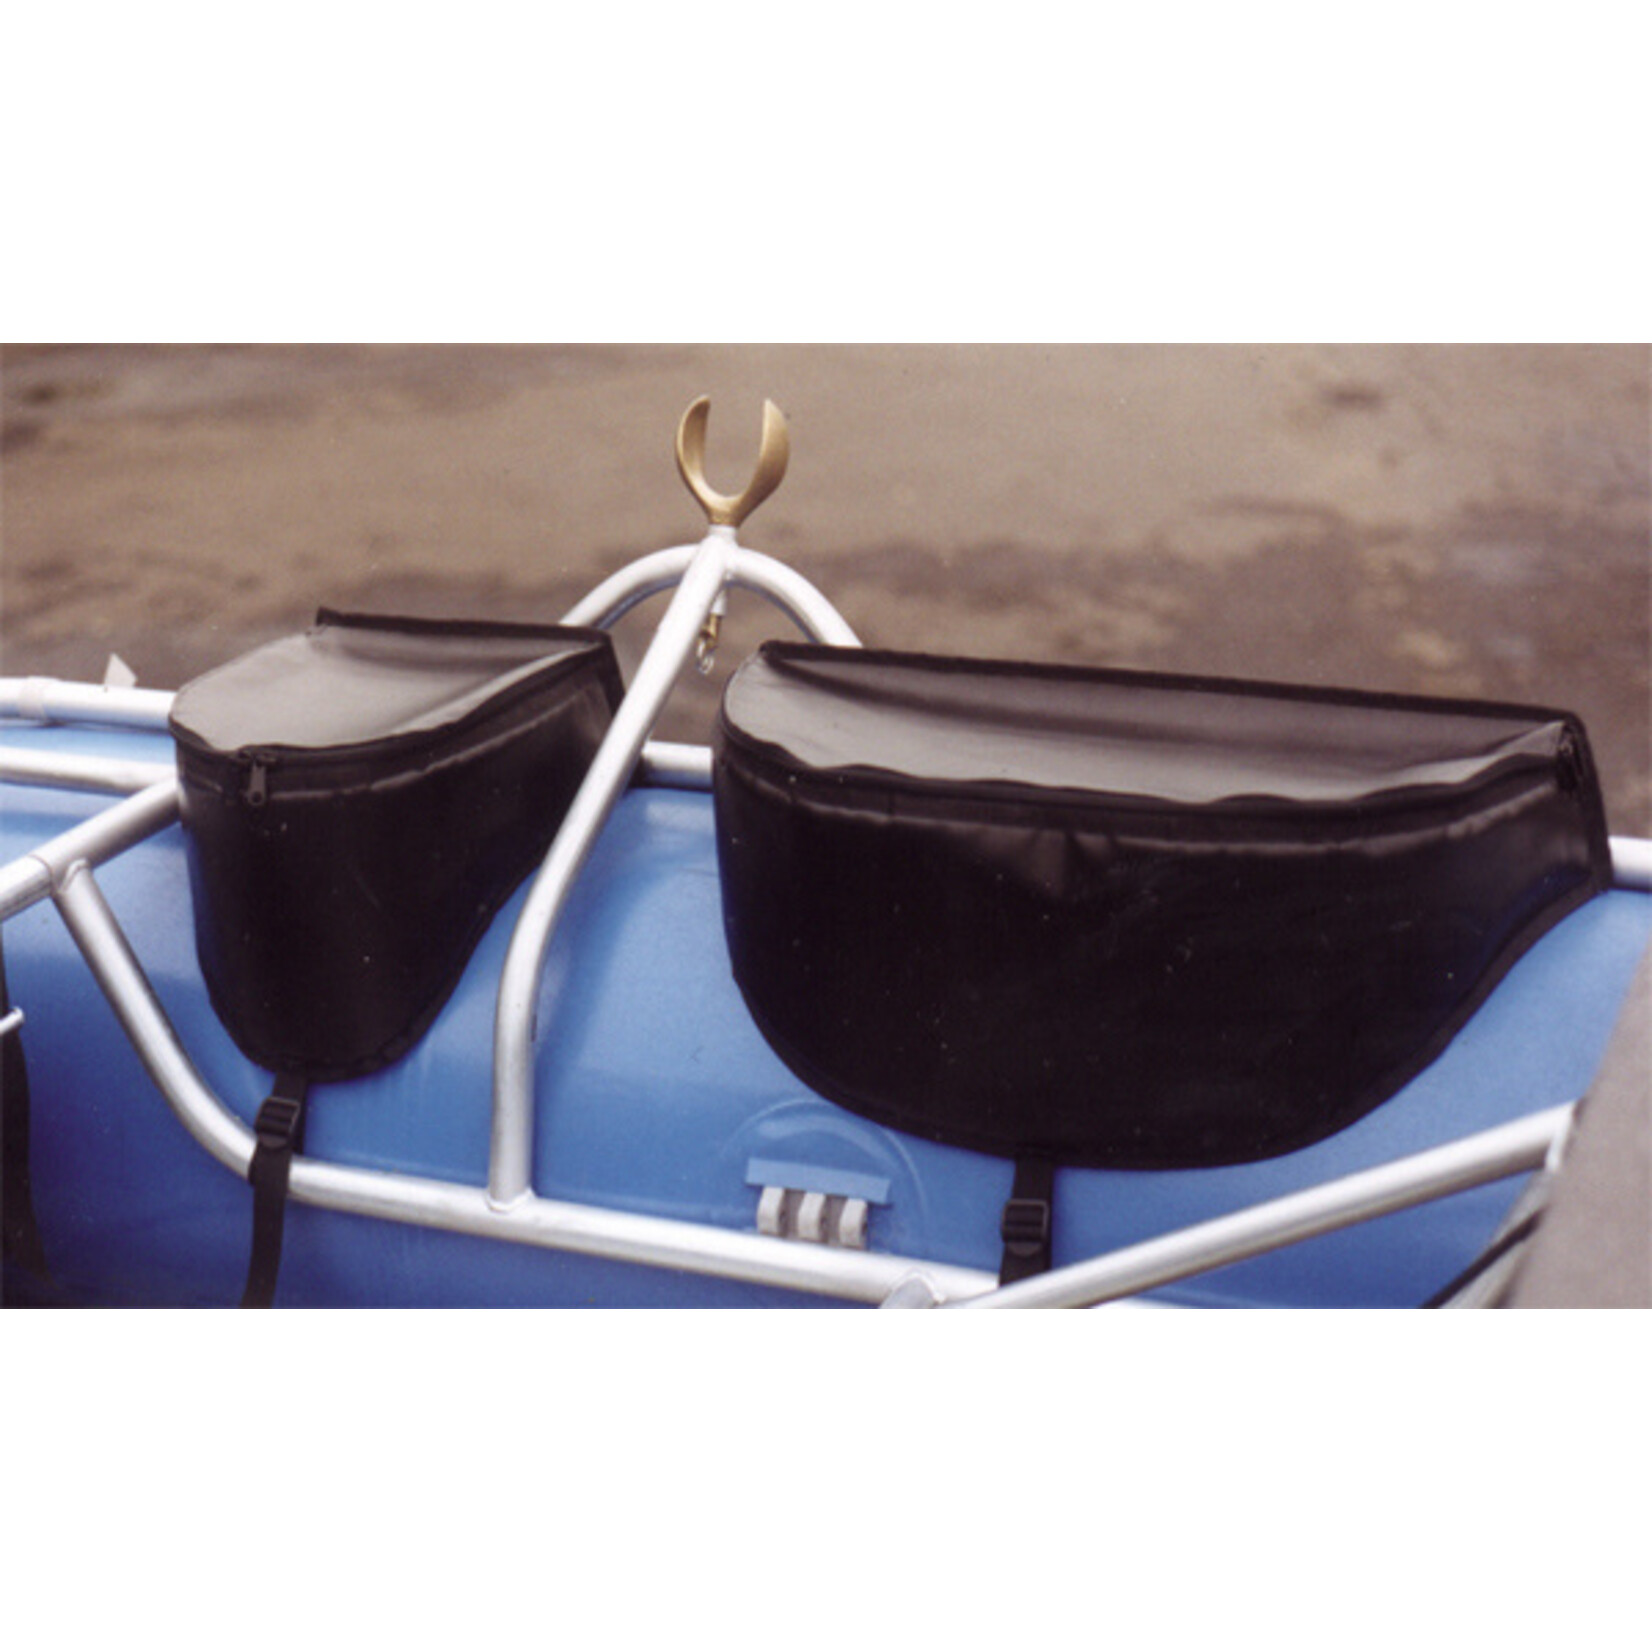 Whitewater Designs Whitewater Designs Saddle Bag